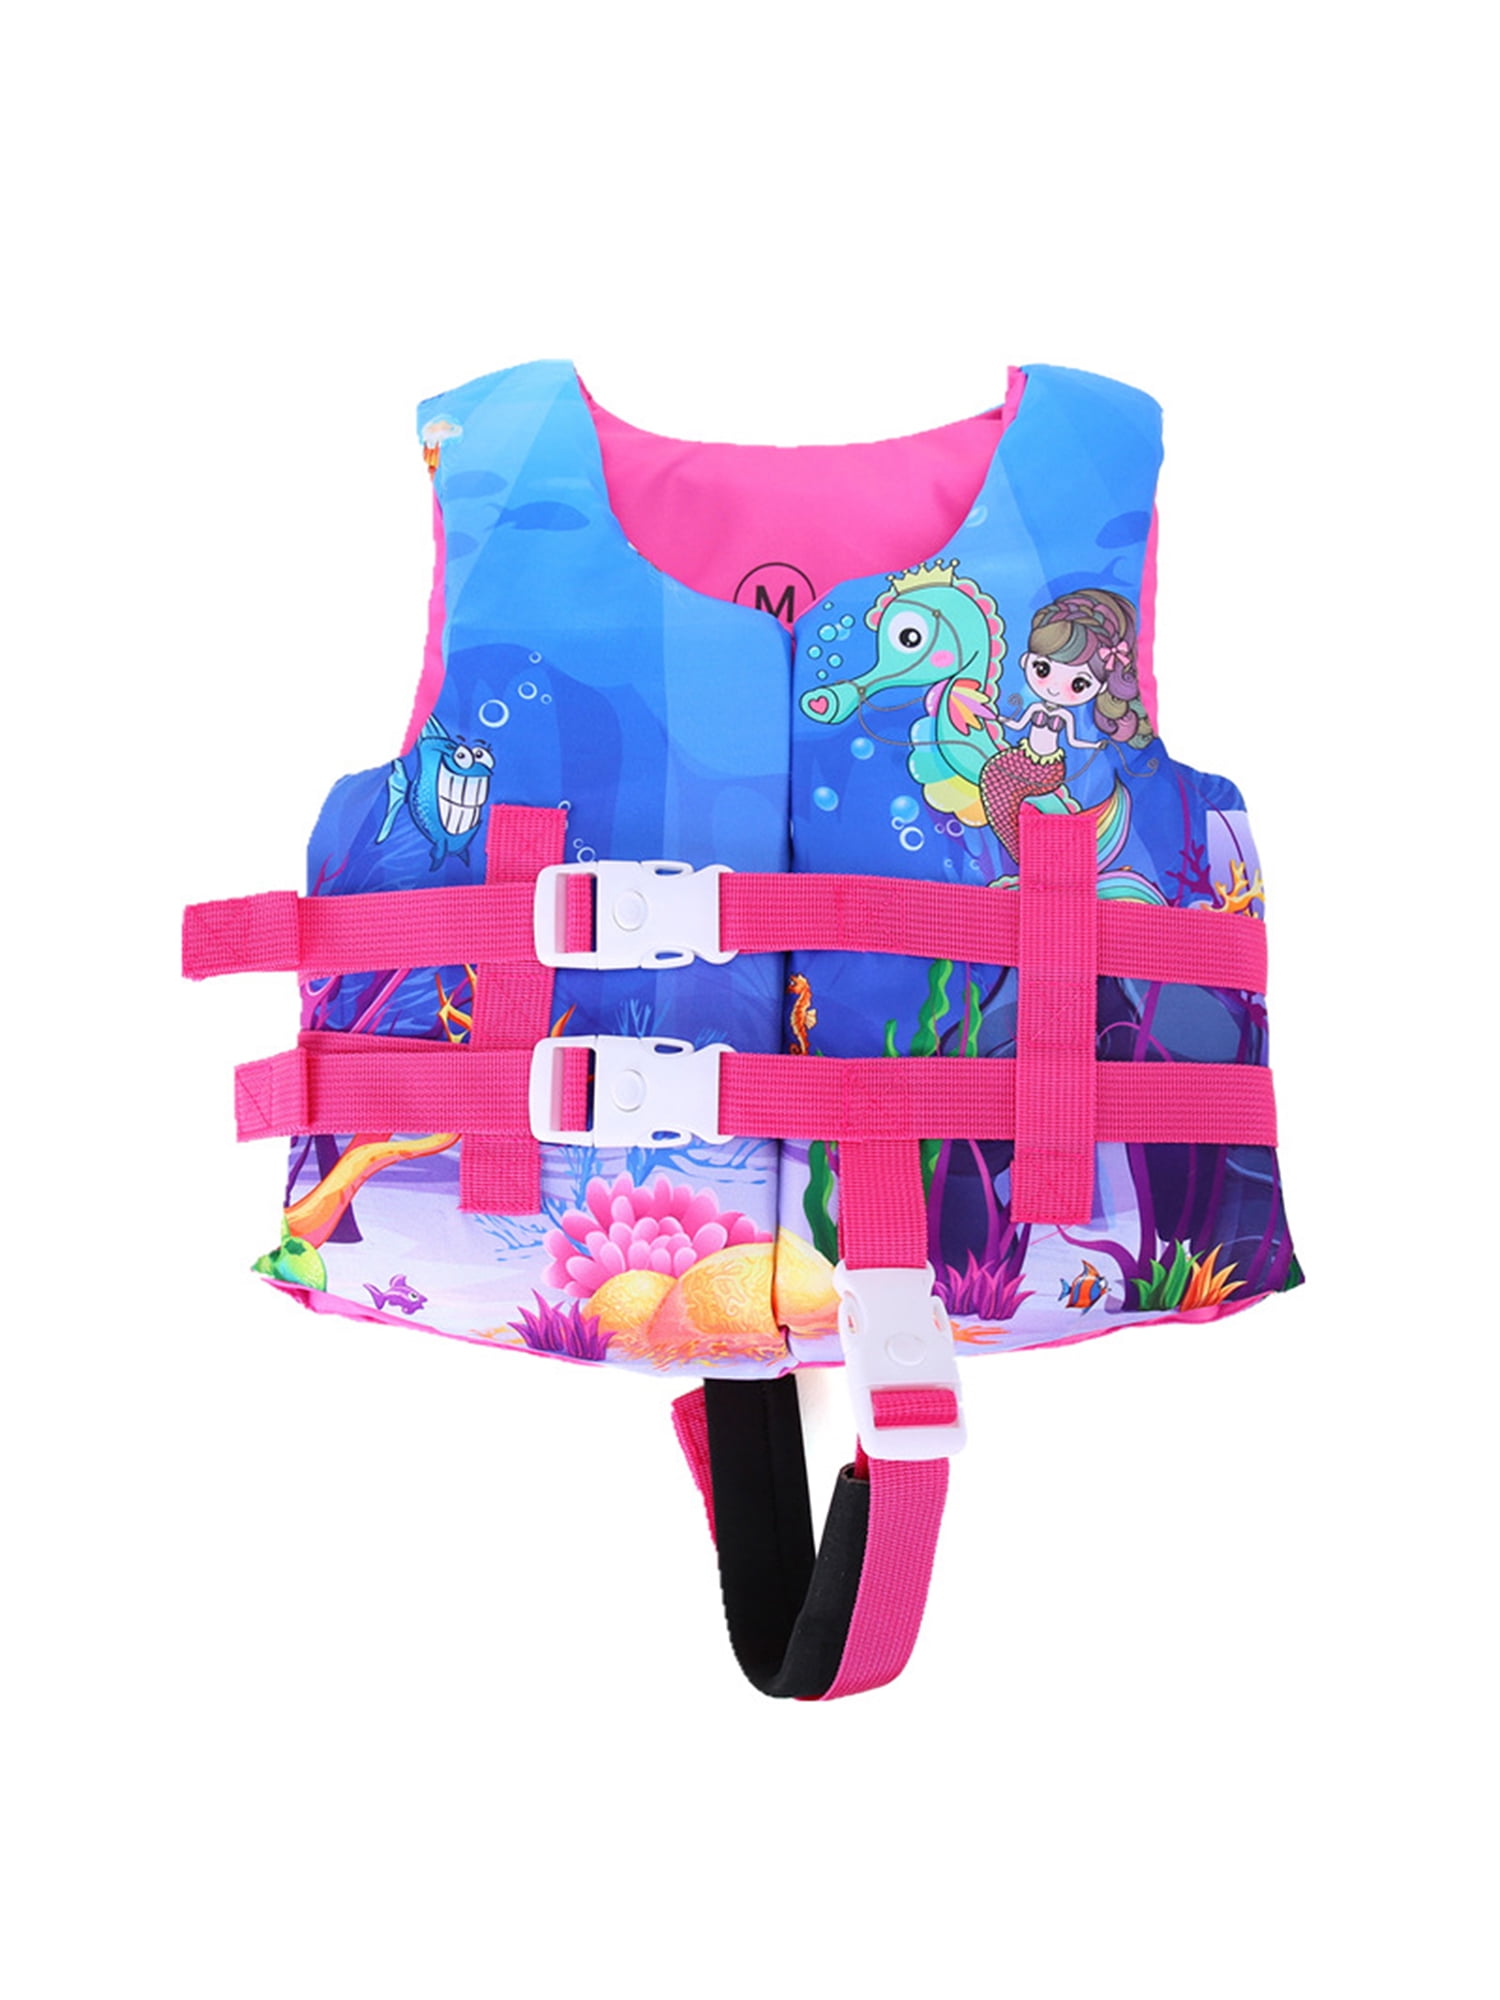 Details about   Swimways Disney Frozen 2 PACK Swim Life Jacket Vest Trainer Float 30-50 Lbs New 